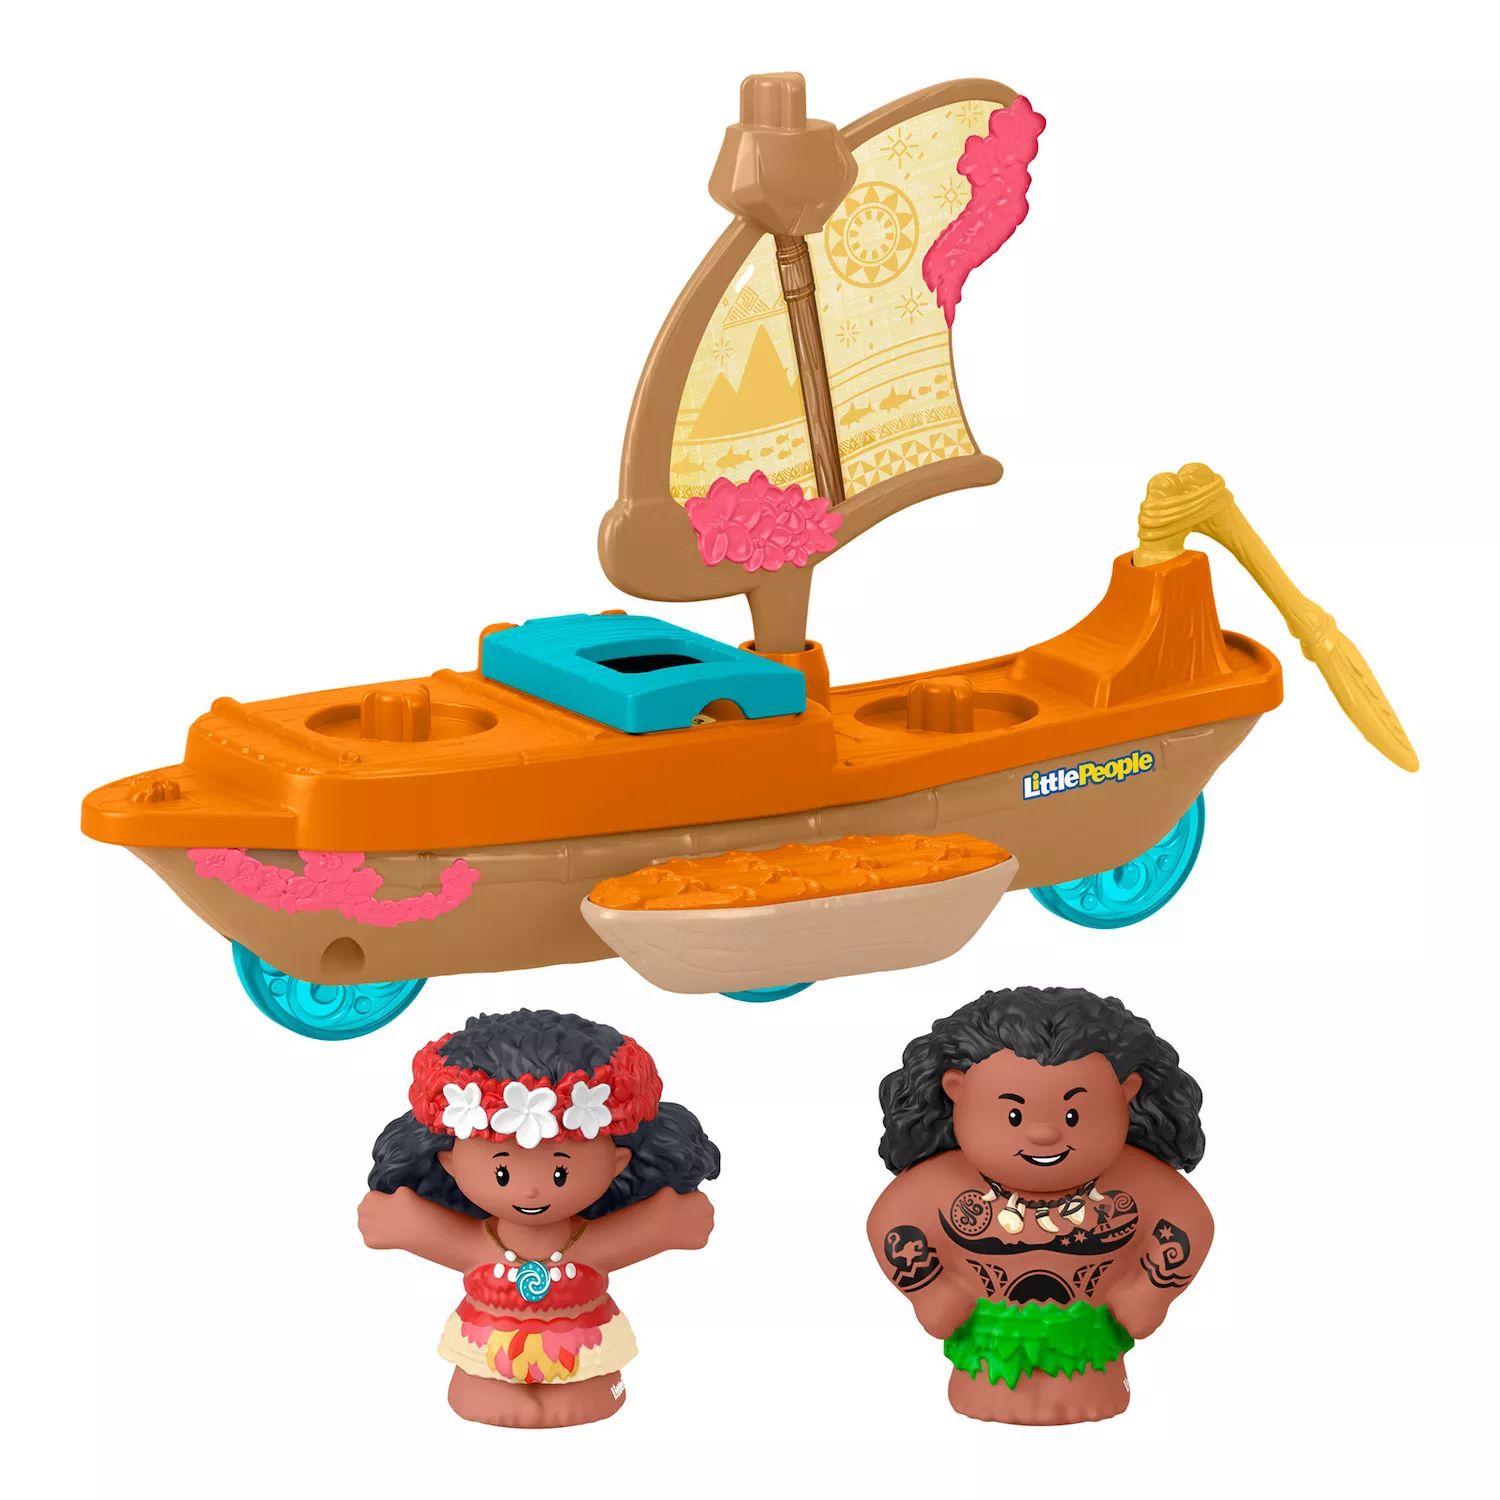 цена Набор каноэ и фигурок Disney's Moana & Maui Little People от Fisher-Price Little People